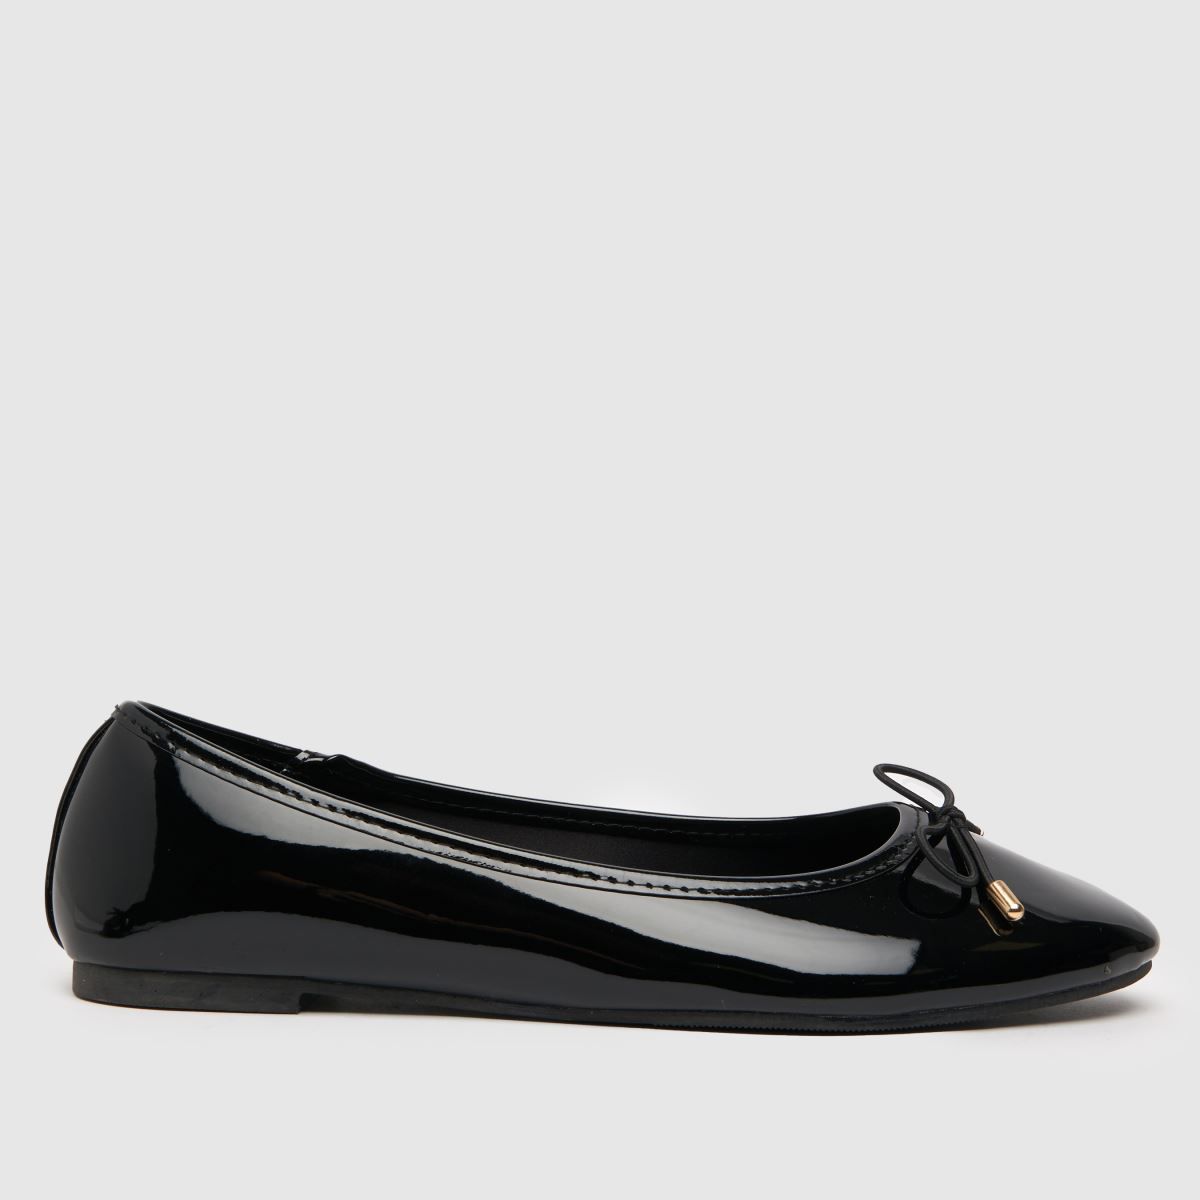 schuh black lindsey patent ballerina flat shoes | Schuh